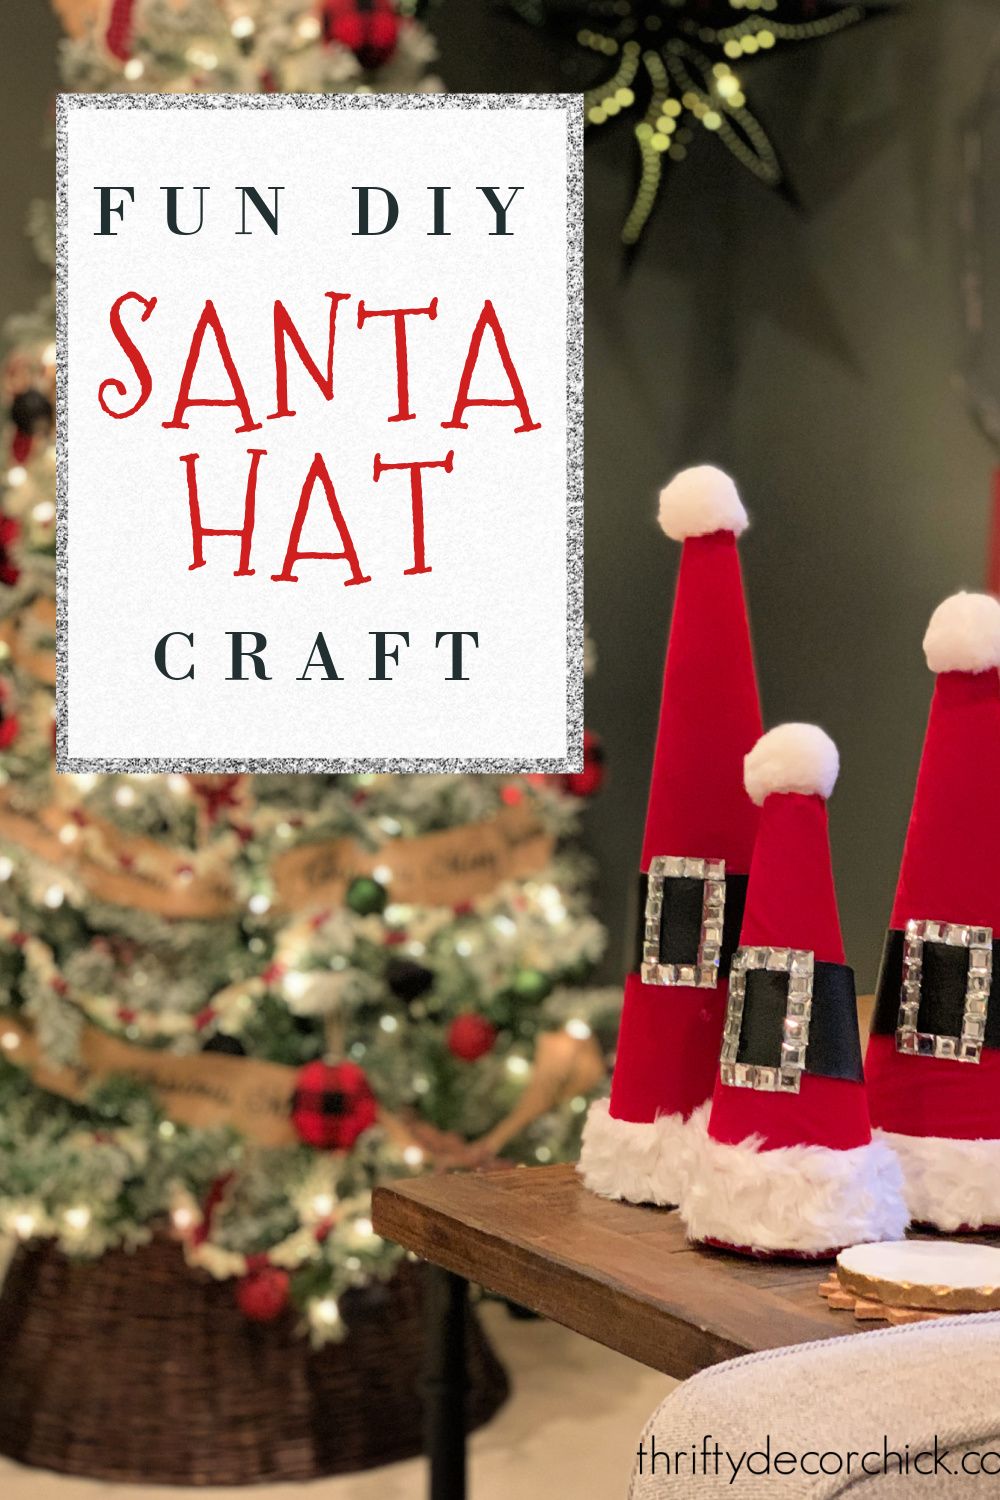 Santa cone hat craft